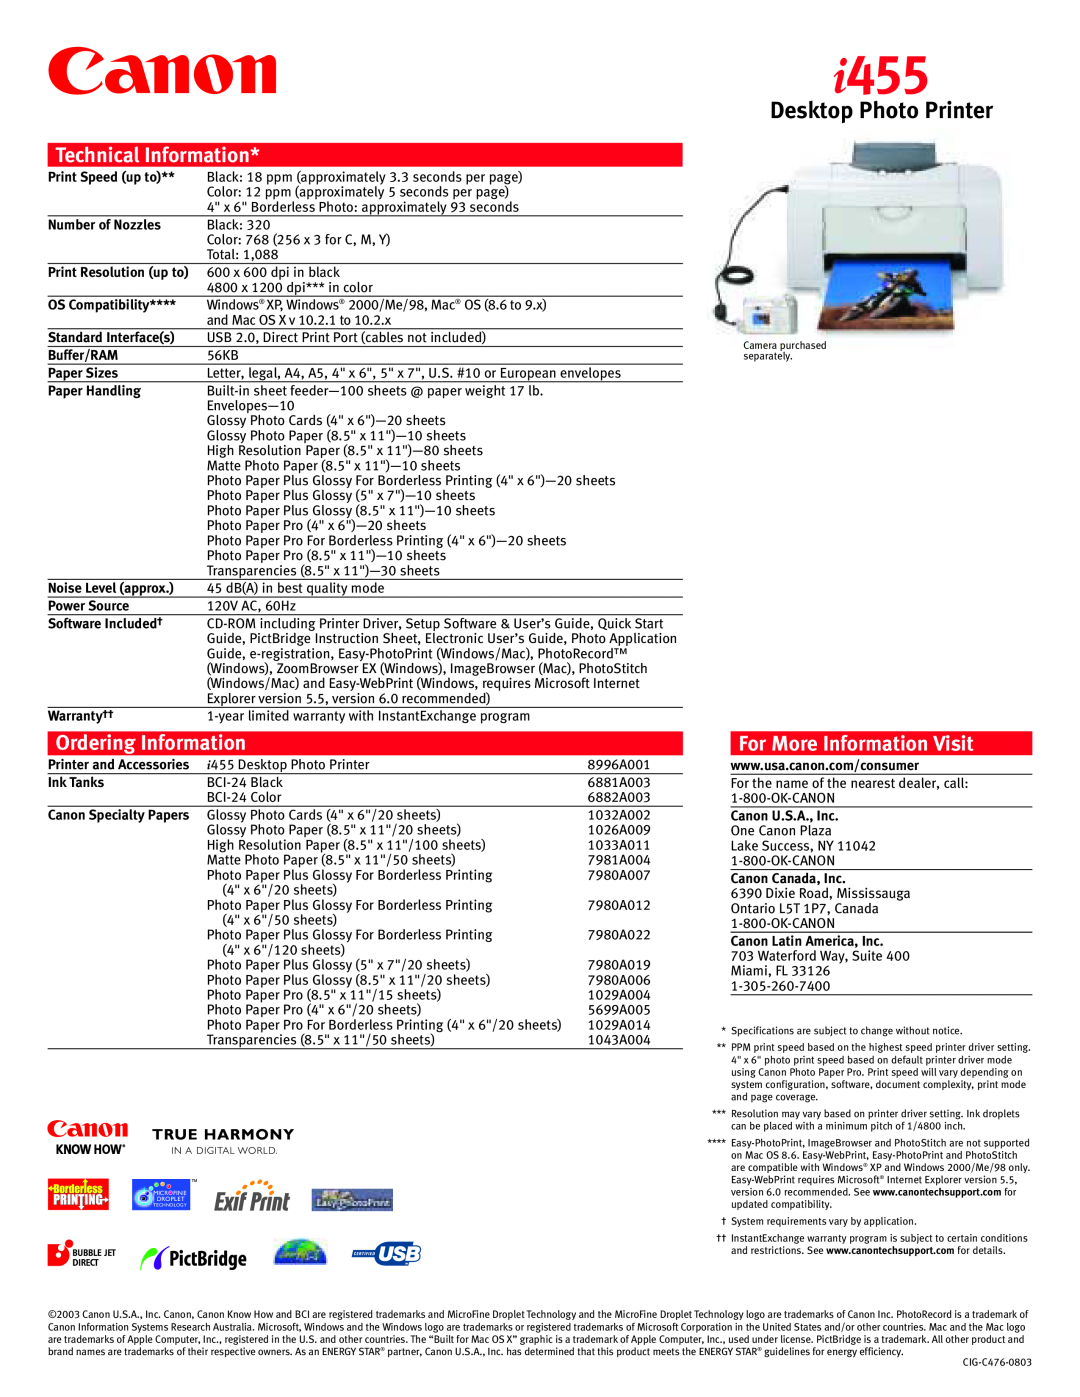 Canon I455 manual i455, Desktop Photo Printer, Technical Information, Ordering Information, For More Information Visit 